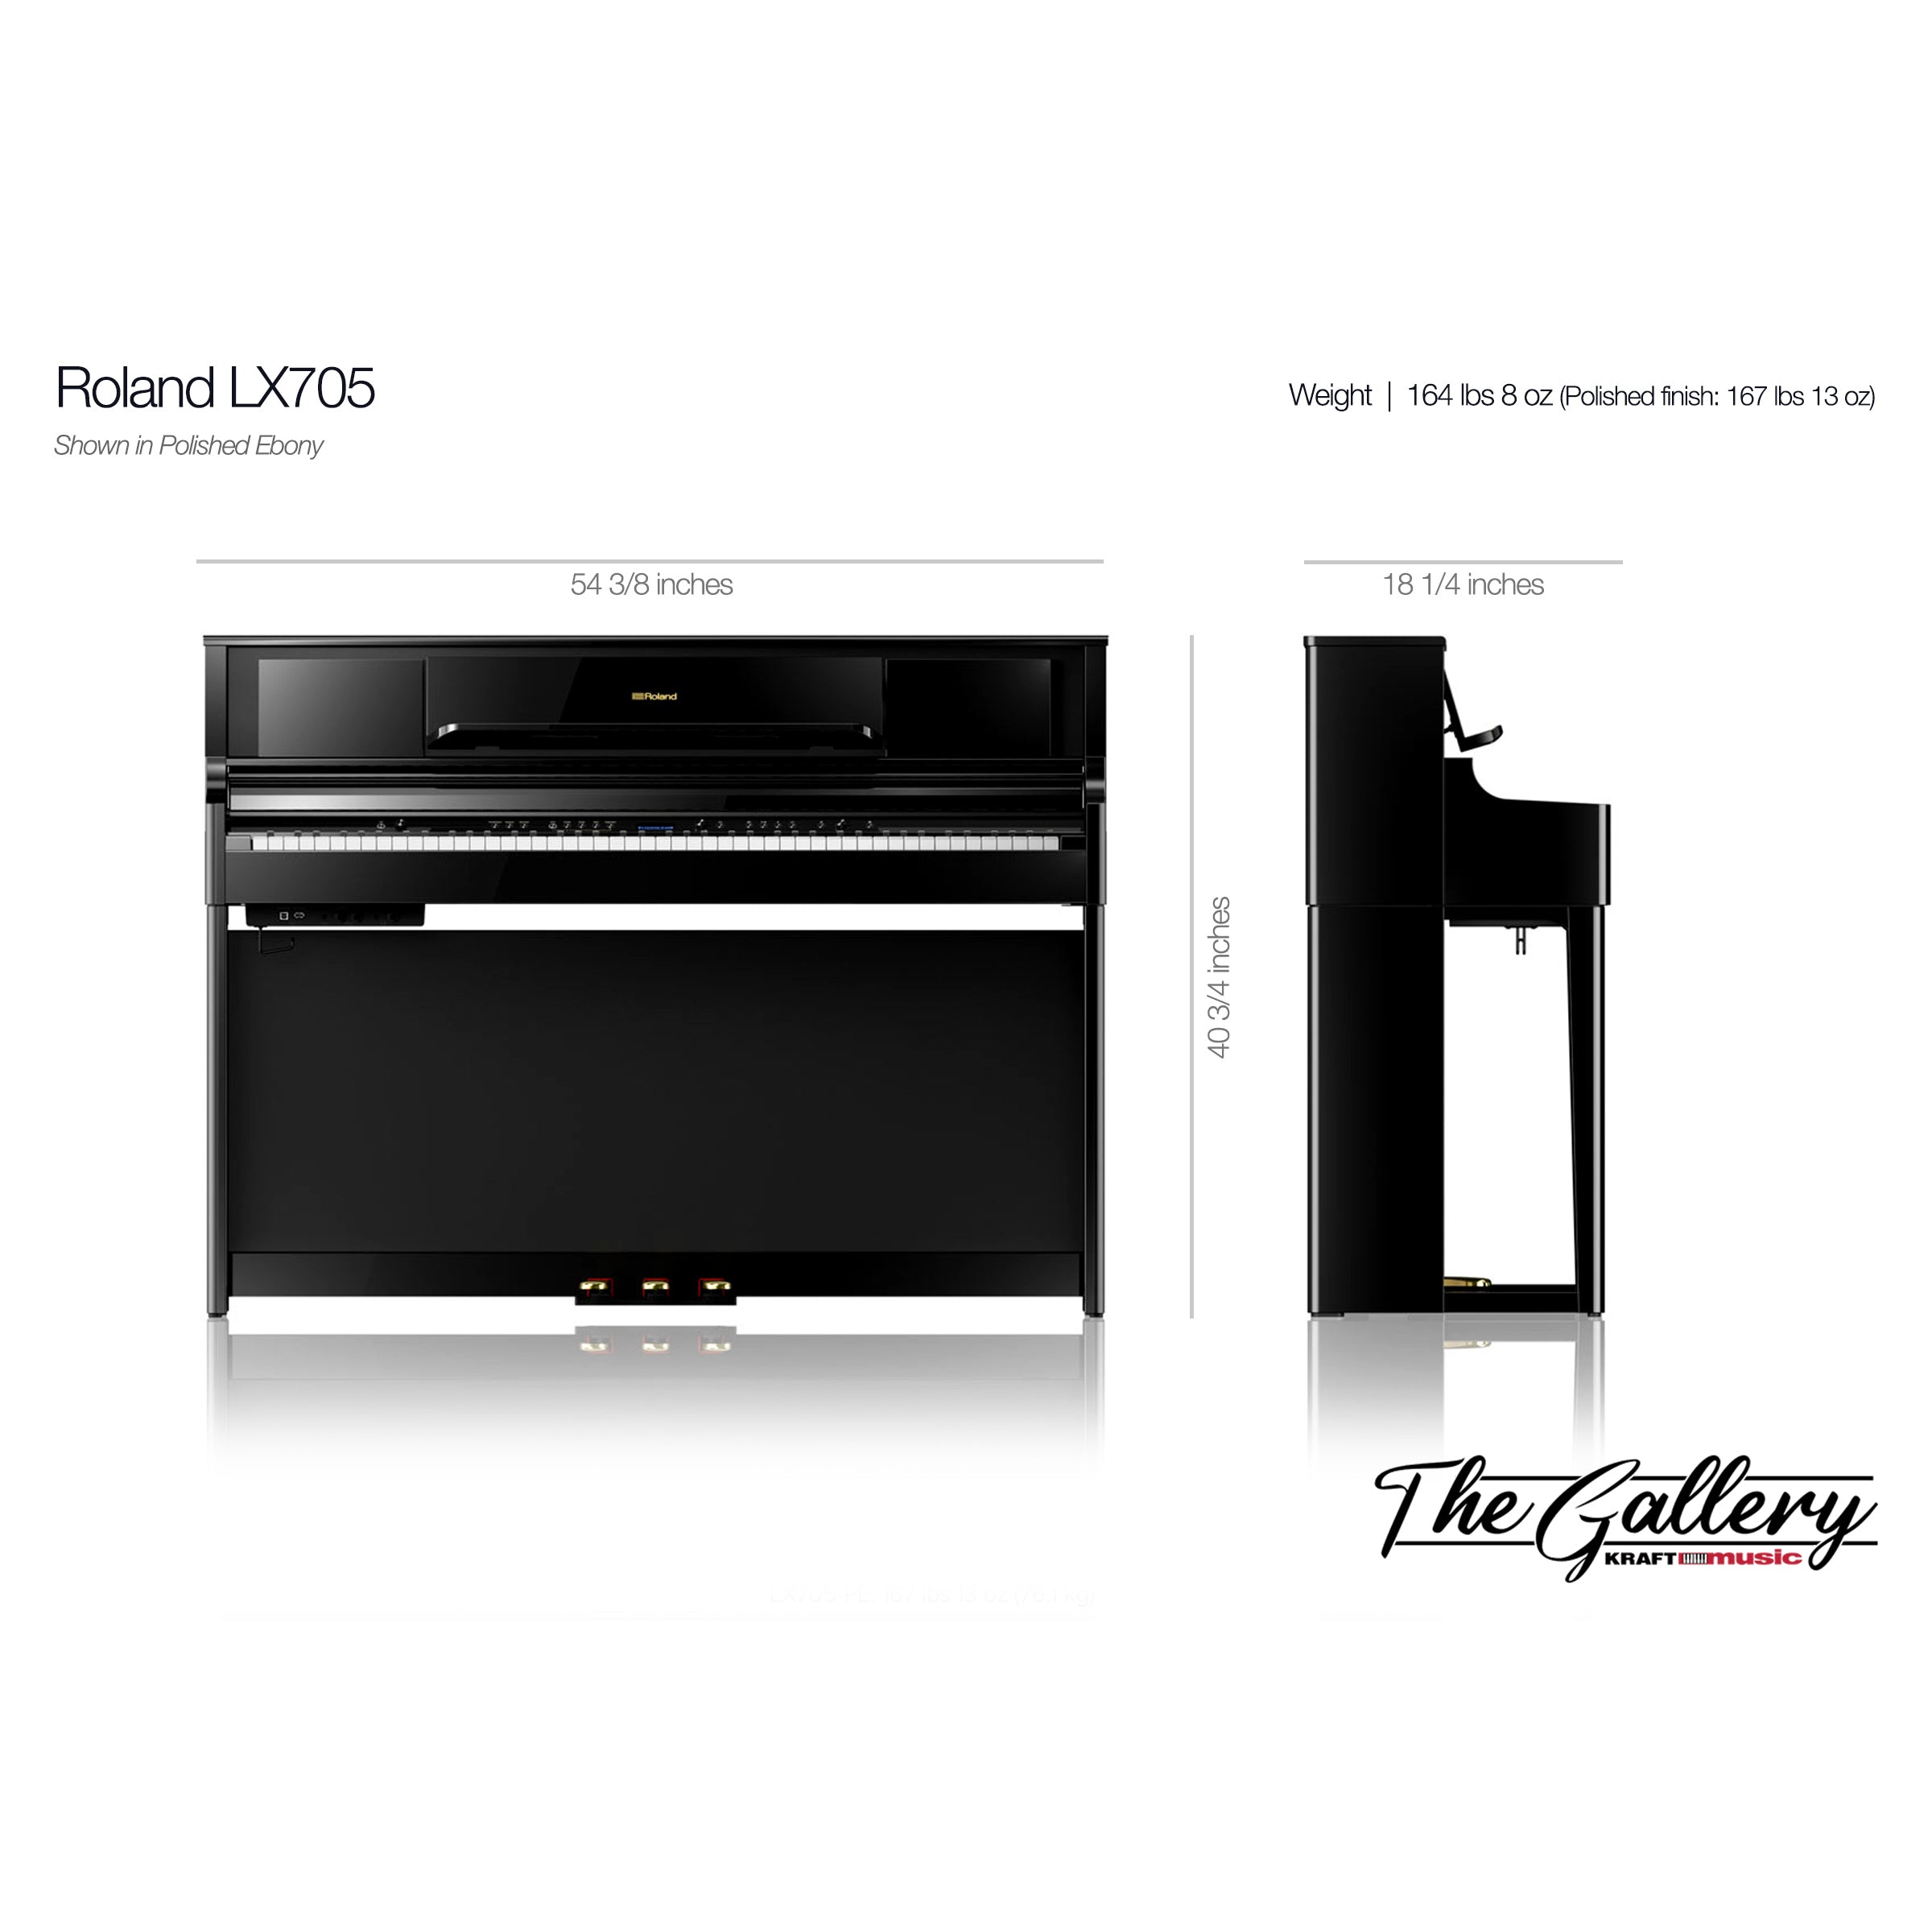 Roland LX705 Digital Piano - Dimensions